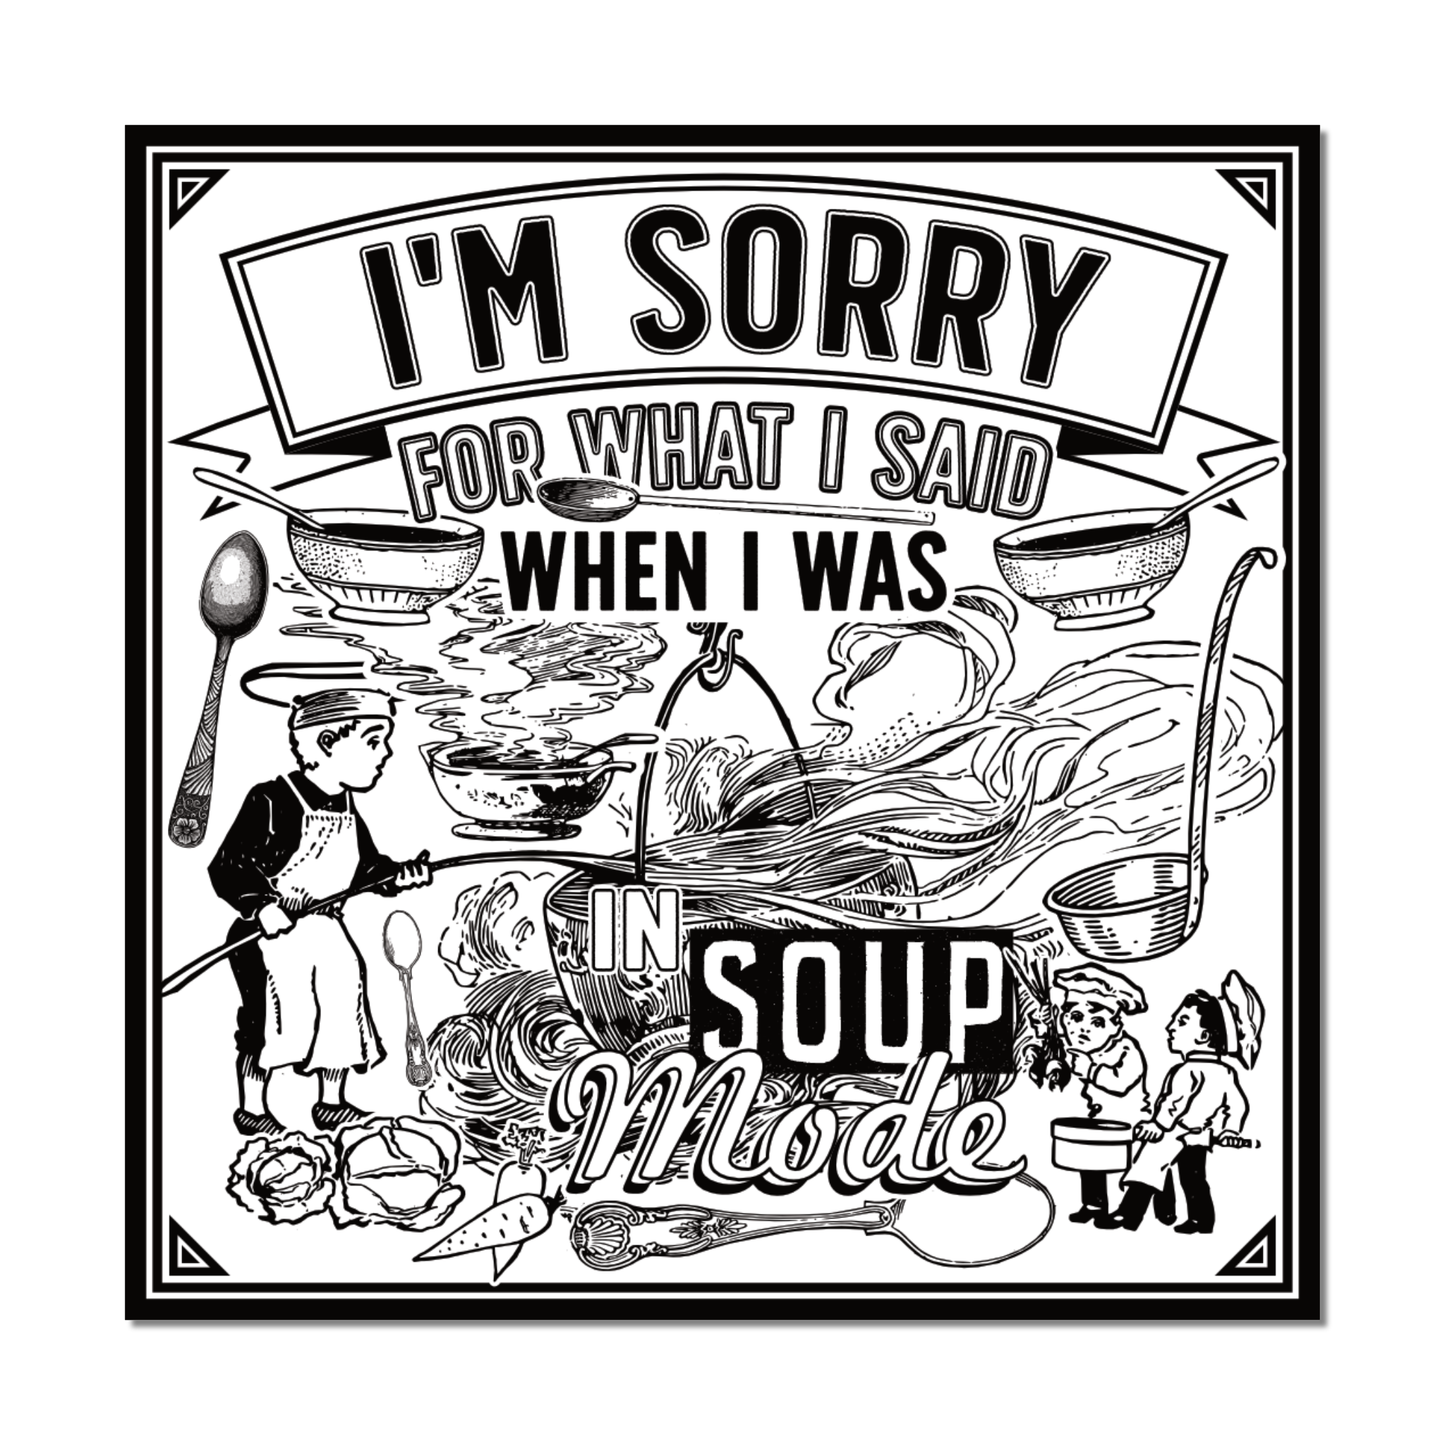 "Soup Mode" Black and White Sticker